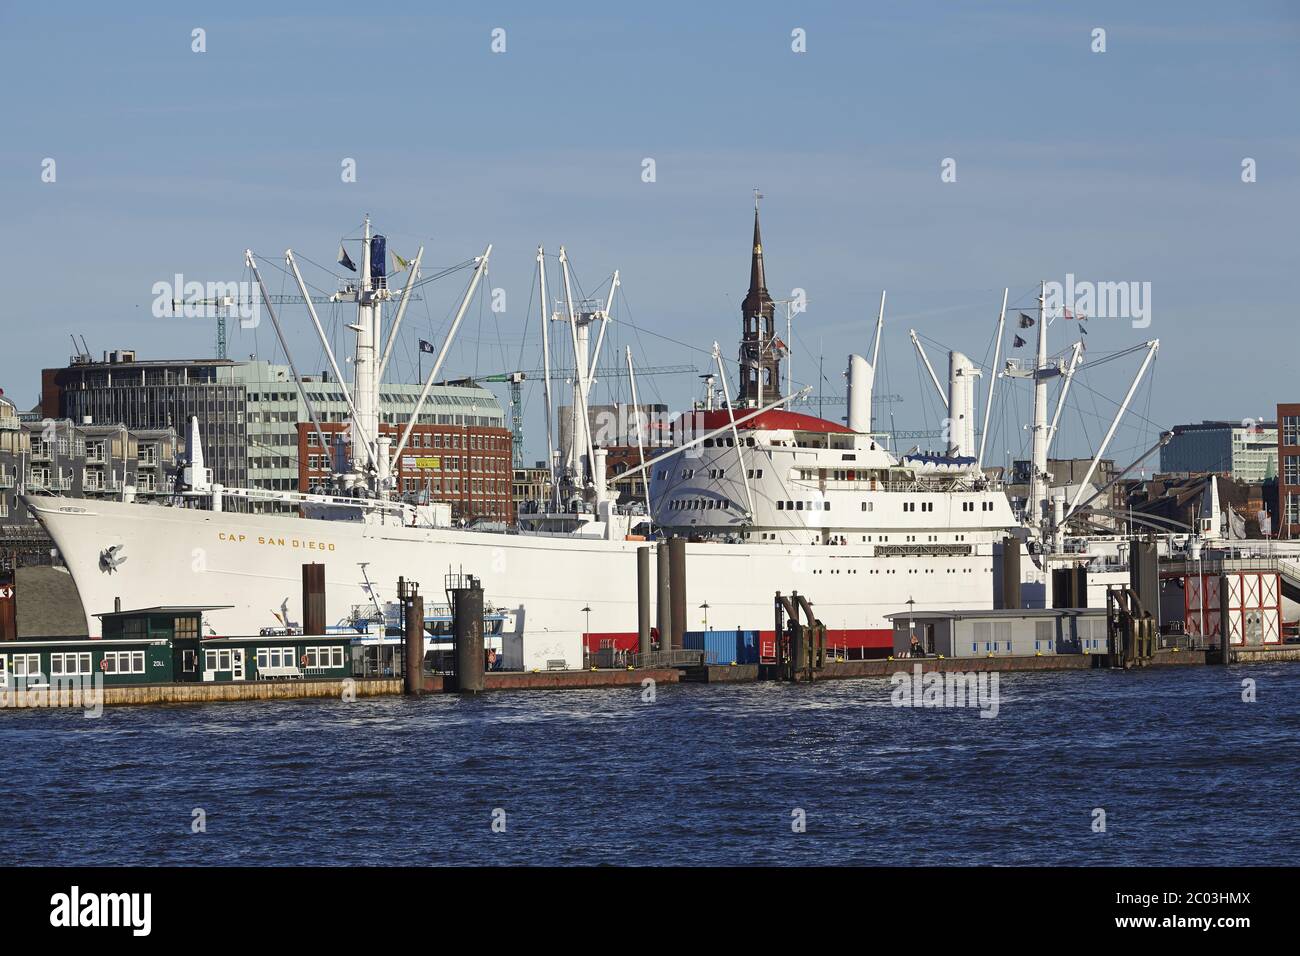 Hamburg - Museum ship Cap San Diego Stock Photo